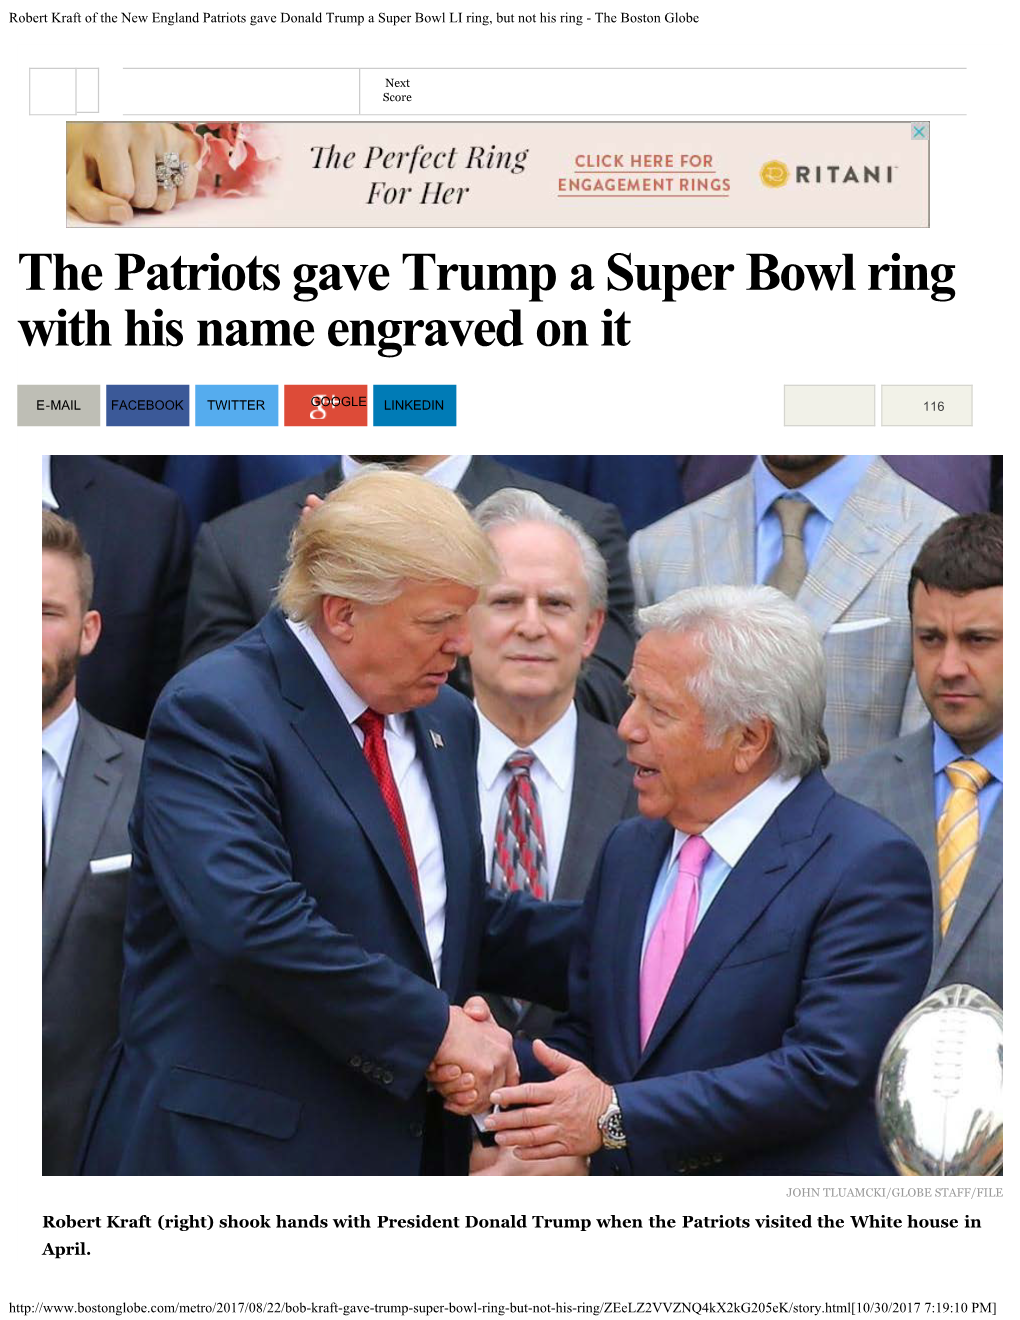 Robert Kraft of the New England Patriots Gave Donald Trump a Super Bowl LI Ring, but Not His Ring - the Boston Globe